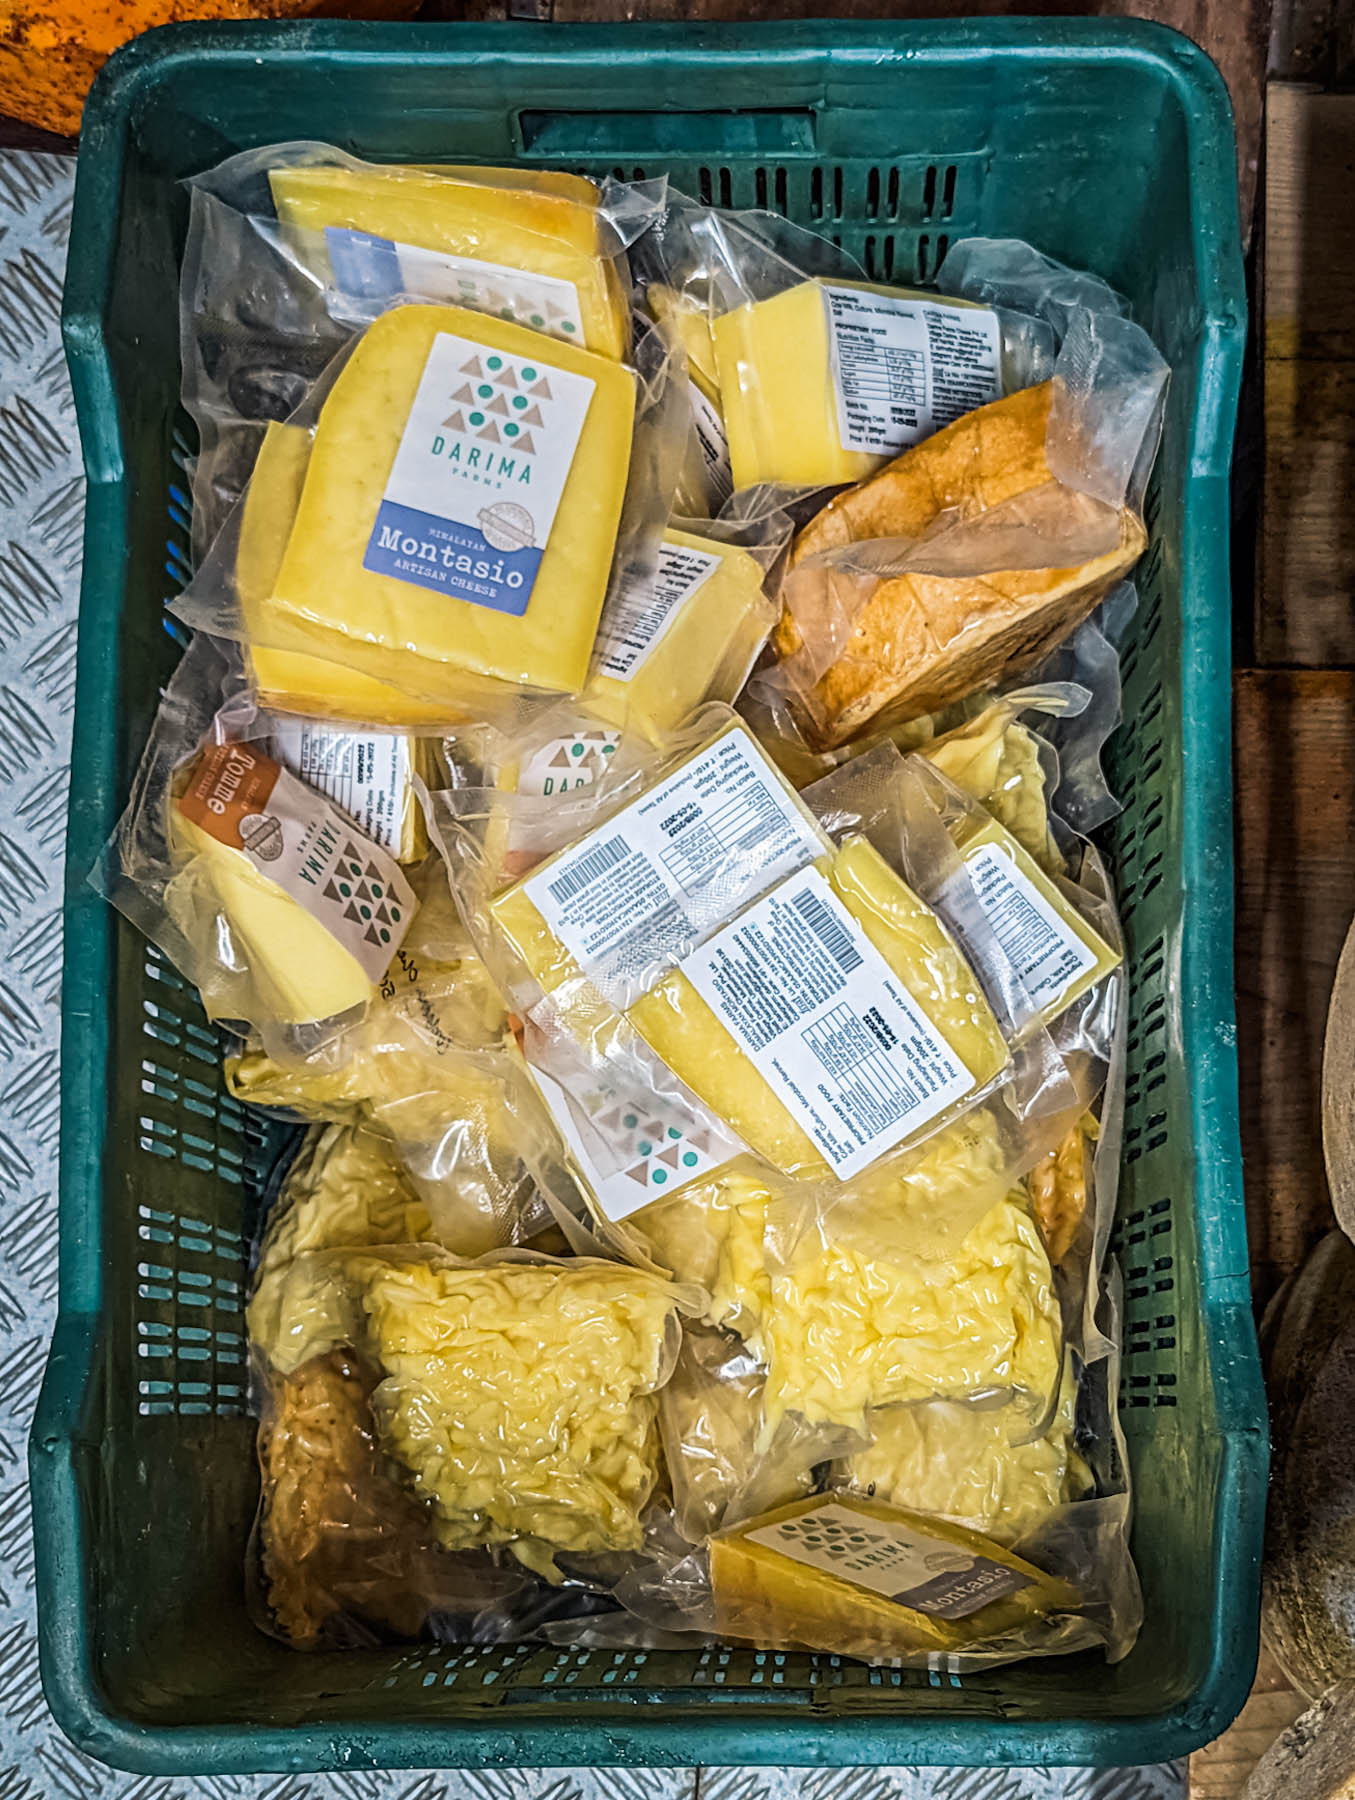 darima farms, darima cheese factory, mukteshwar, uttarakhand, naina redhu, naina.co, cheese brand, indian cheese, cheese from the hills, pahadi cheese, eyesfordestinations, eyesfordining, cheddar, cooking cheese, cottage cheese, cheese processing, hand made cheese, natural, artisanal cheese, chilli bomb, chilli garlic montasio, gouda, alpine gruyere, himalayan mountain cheese, parmesan, tomme, zarai, professional photographer, food photographer, behind the scenes photographer, women photographers india